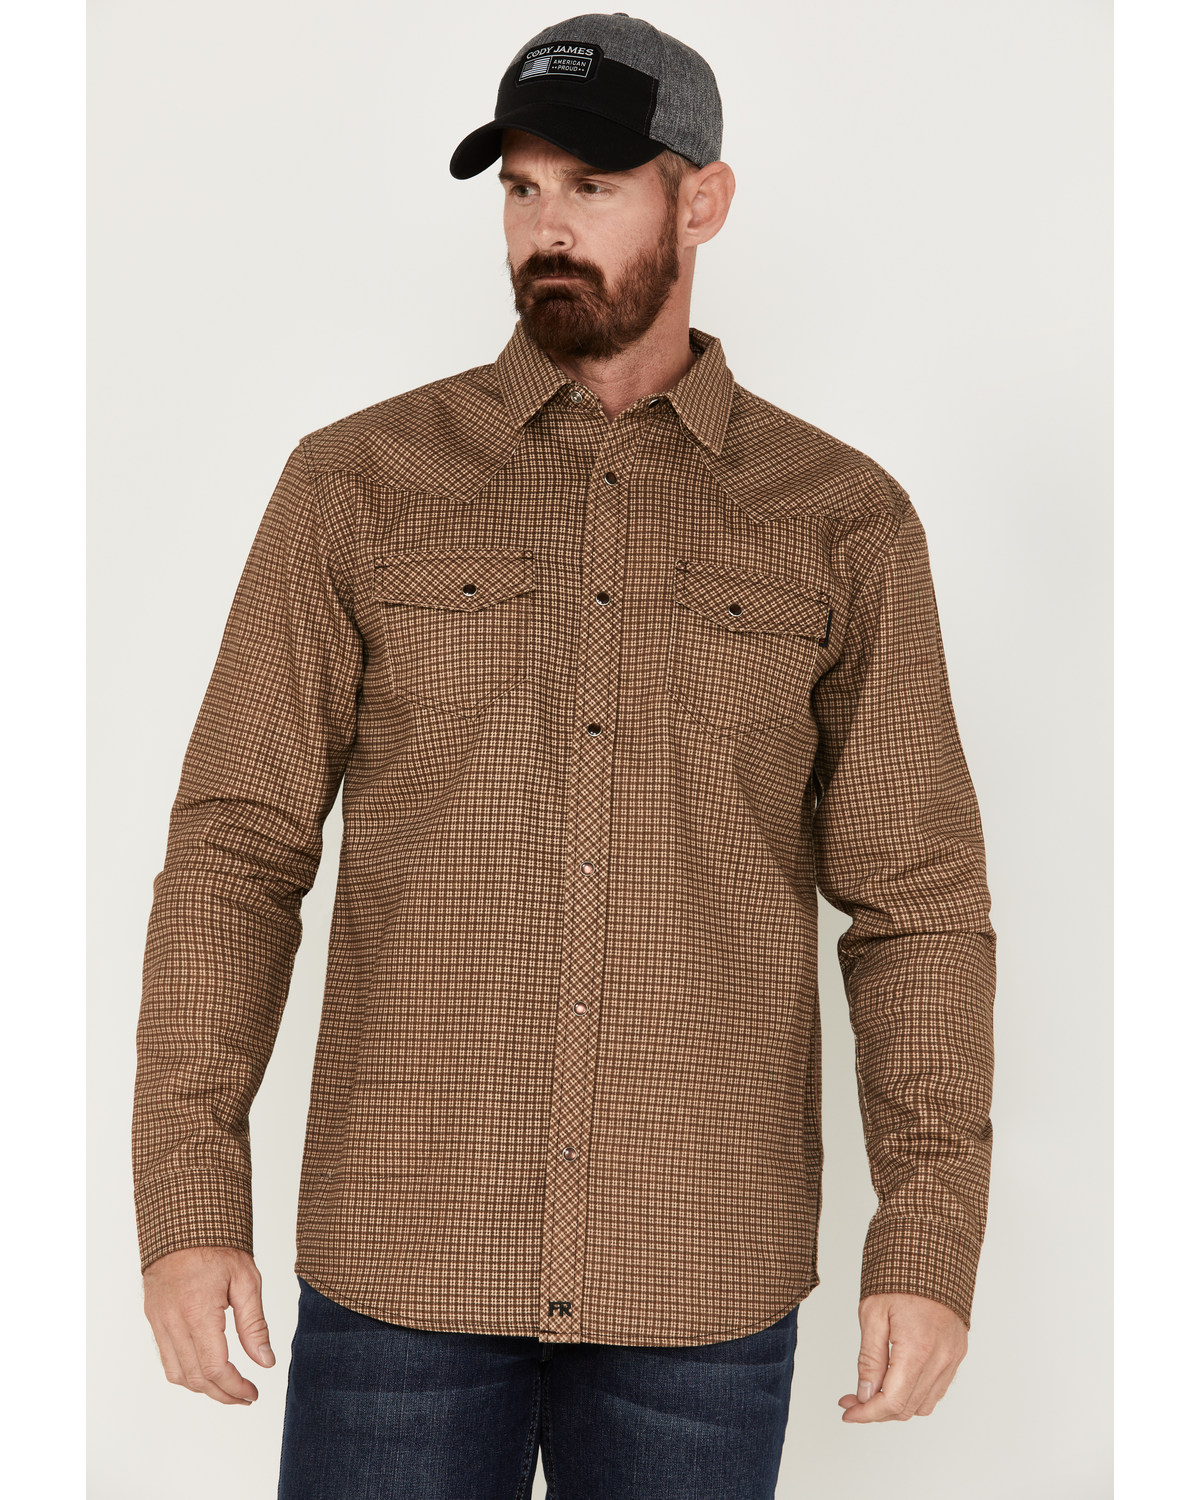 Cody James Men's FR Long Sleeve Snap Western Work Shirt